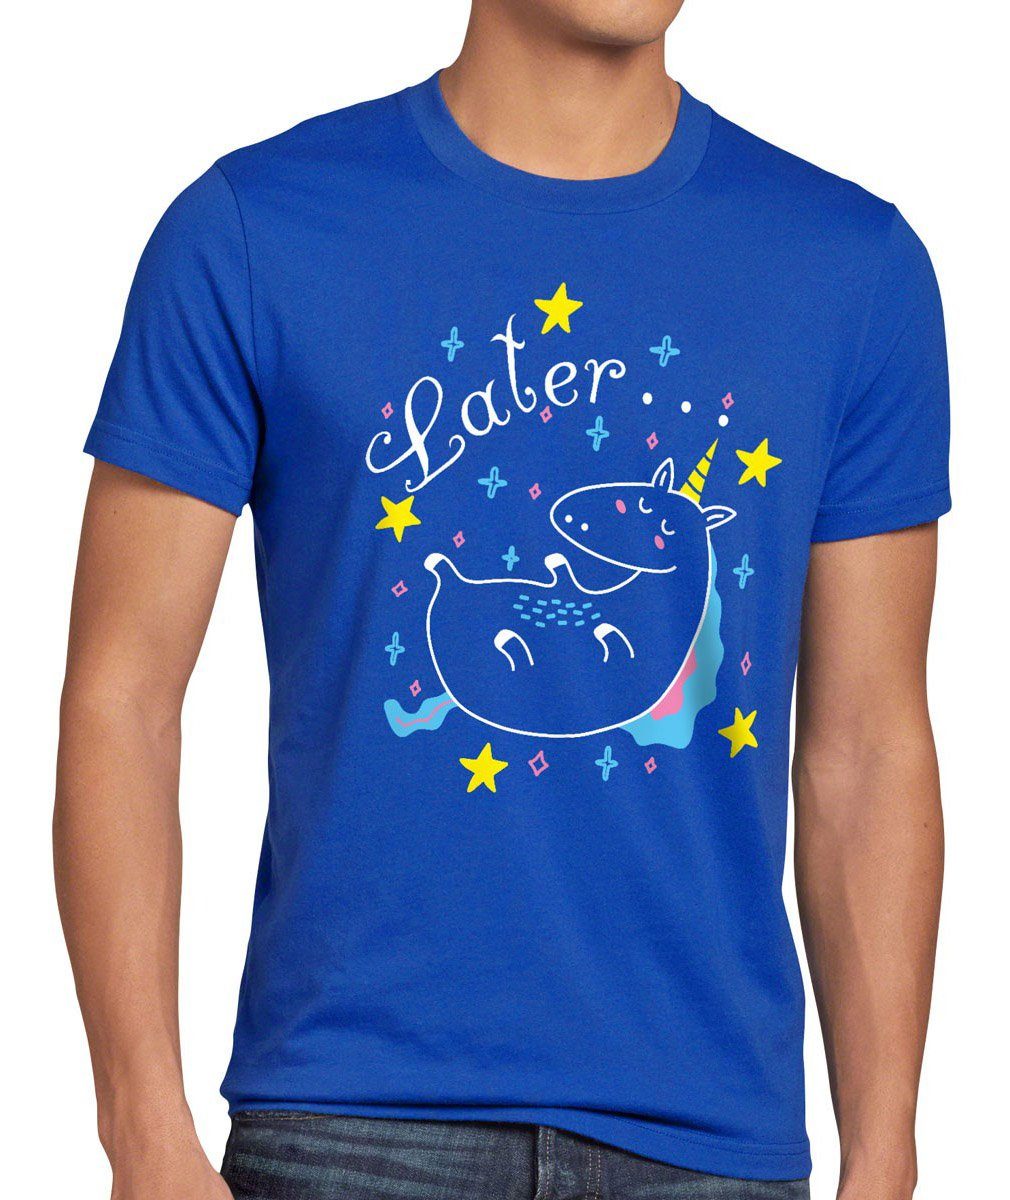 Einhorn später Unicorn Print-Shirt Herren pferd top T-Shirt Sleepy fun do style3 it funshirt blau Later